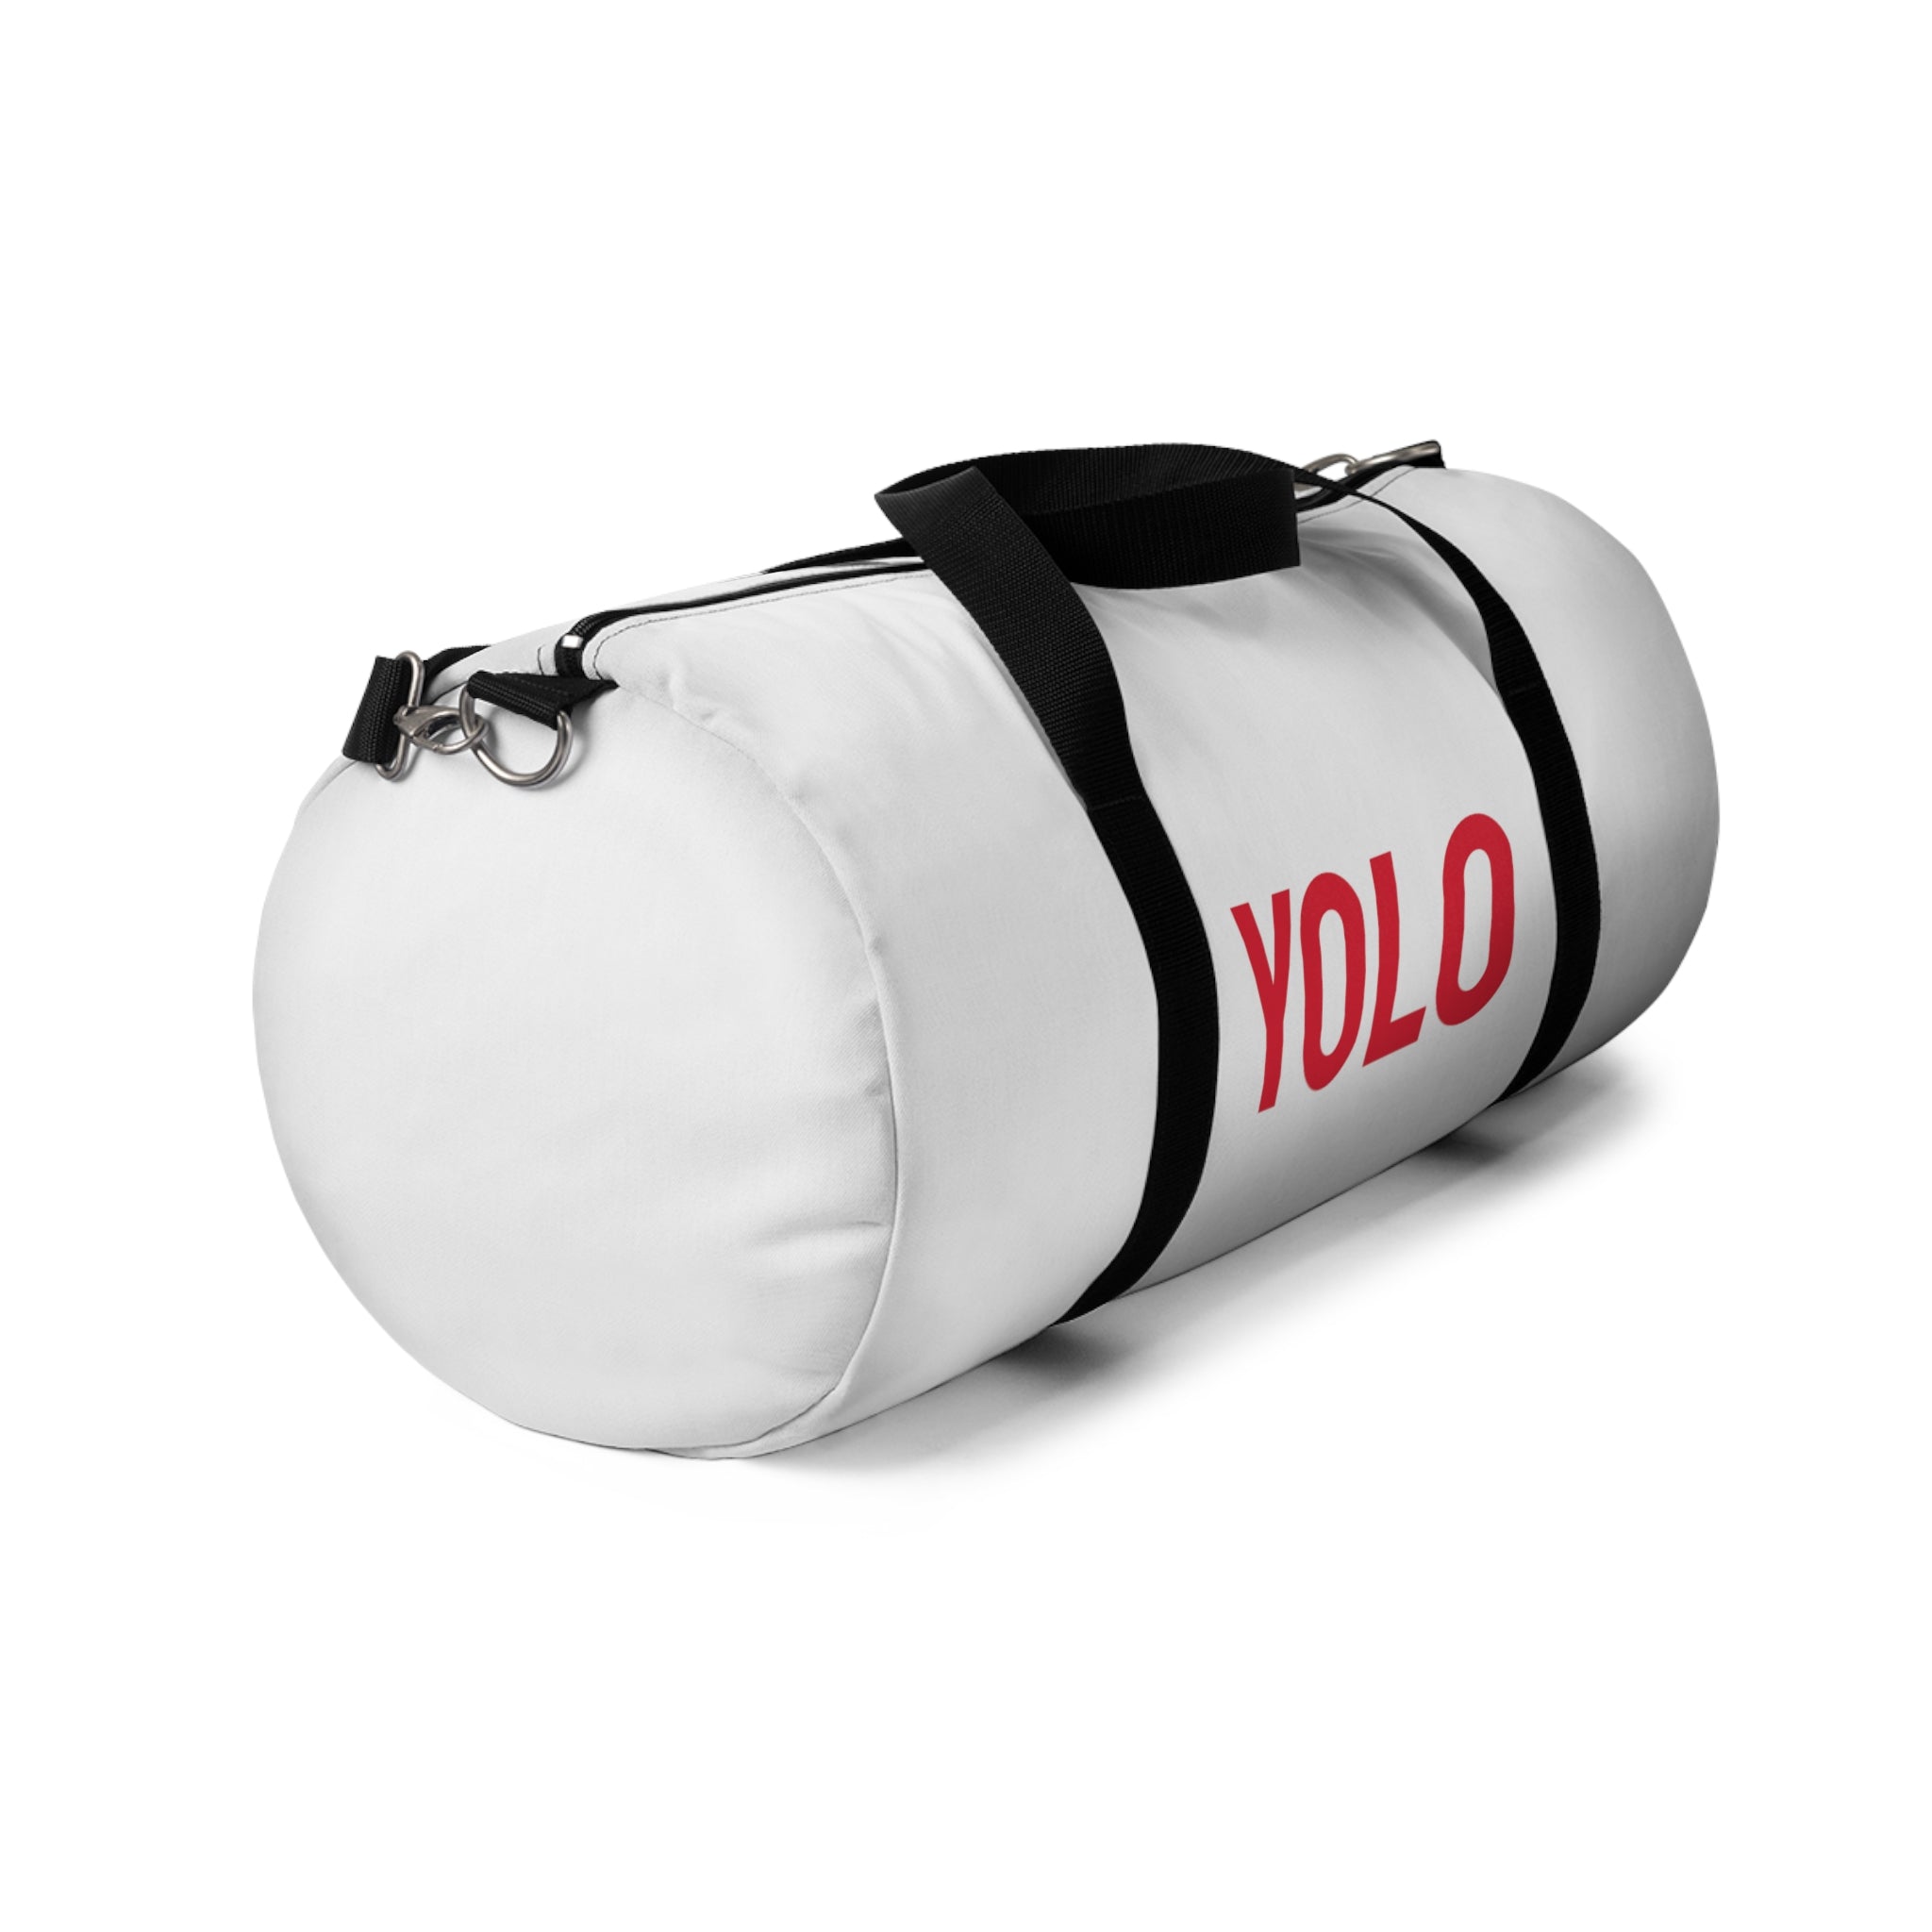 Yolo Duffle Bag (White)